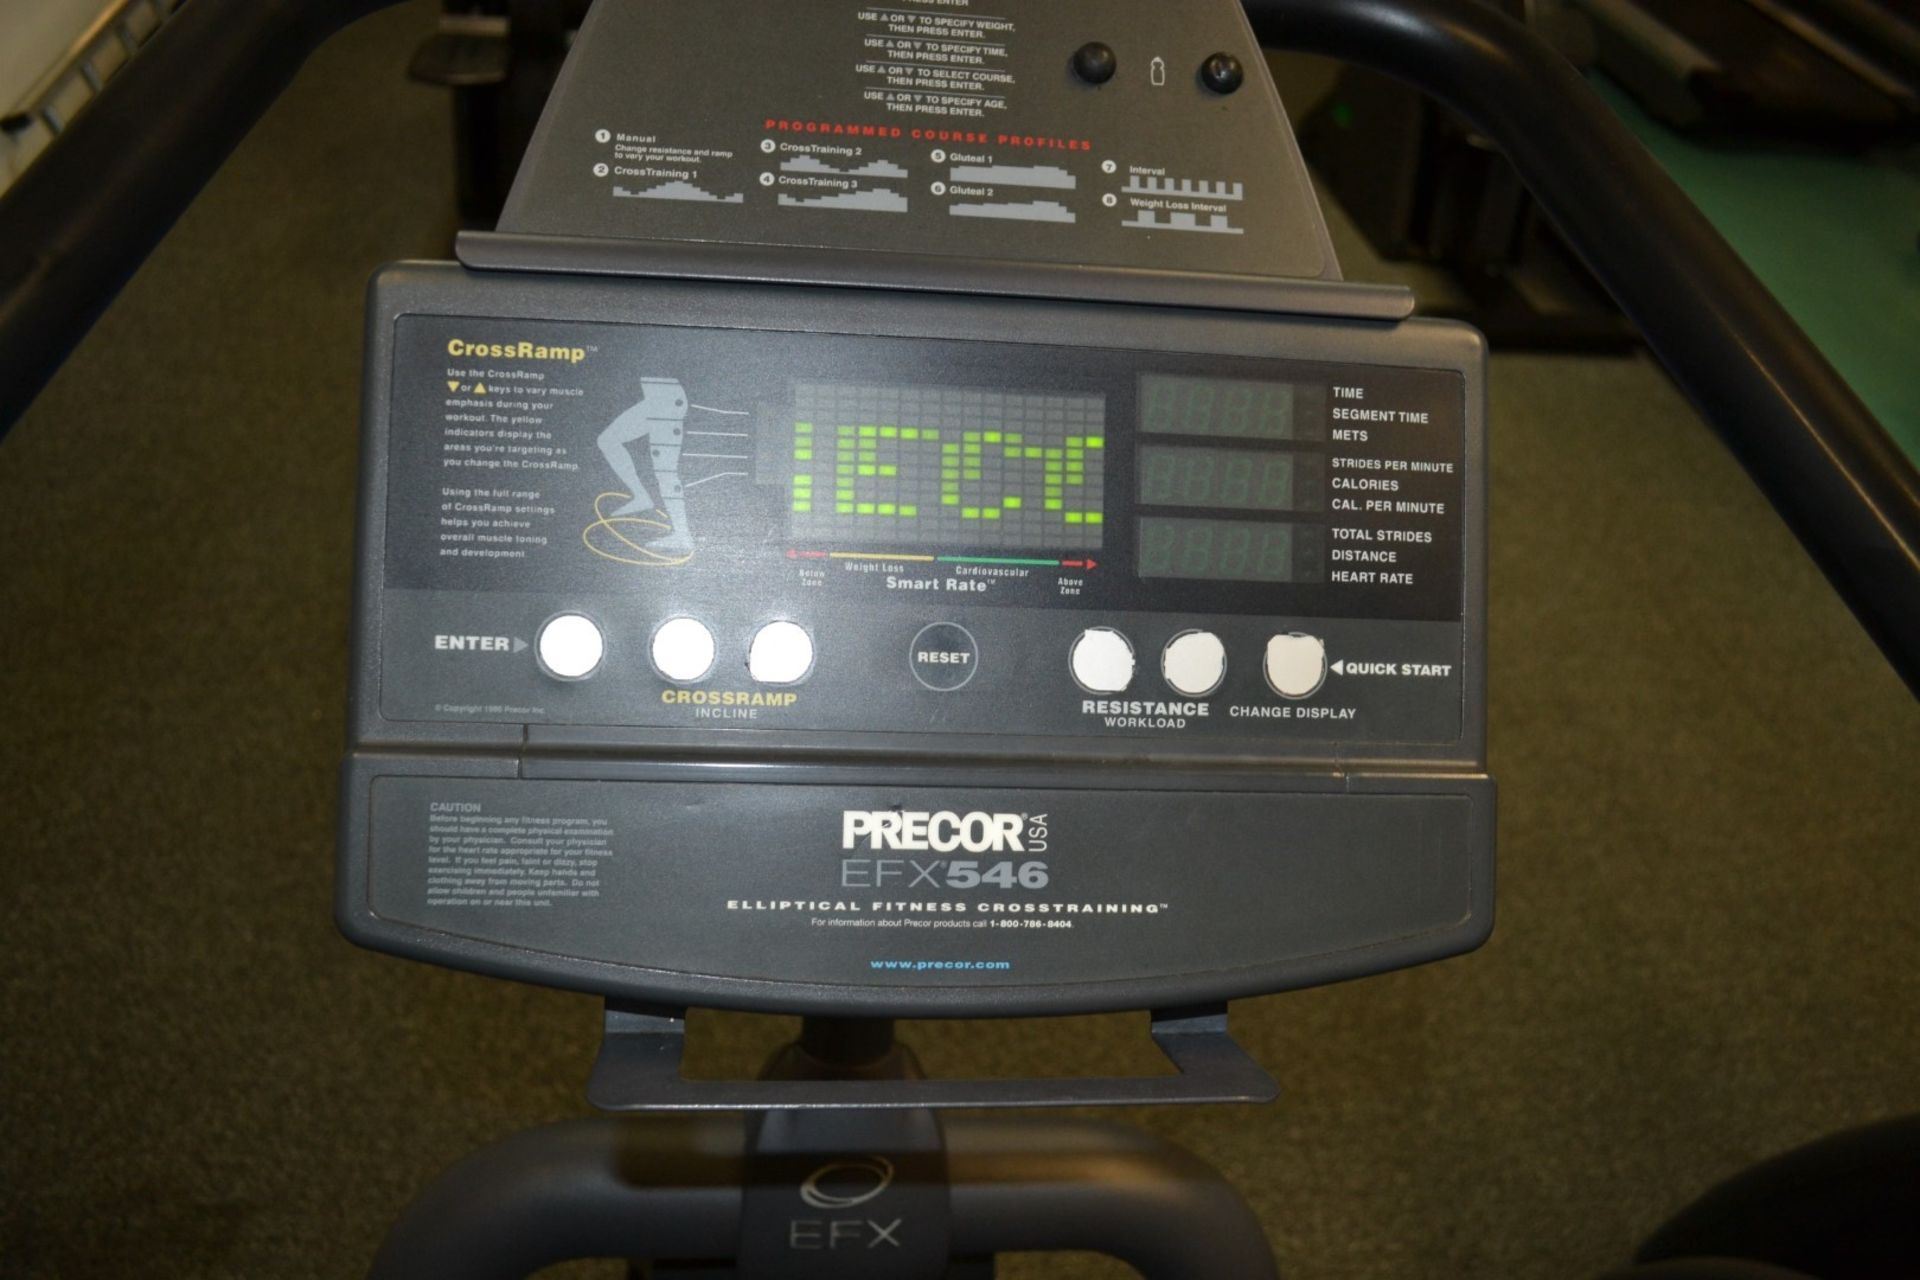 1 x Precor EFX 546 Cross-Trainer Gym Machine - Dimensions: L200 x W90 x H155cm - Ref: J2039/1FG - - Image 2 of 3